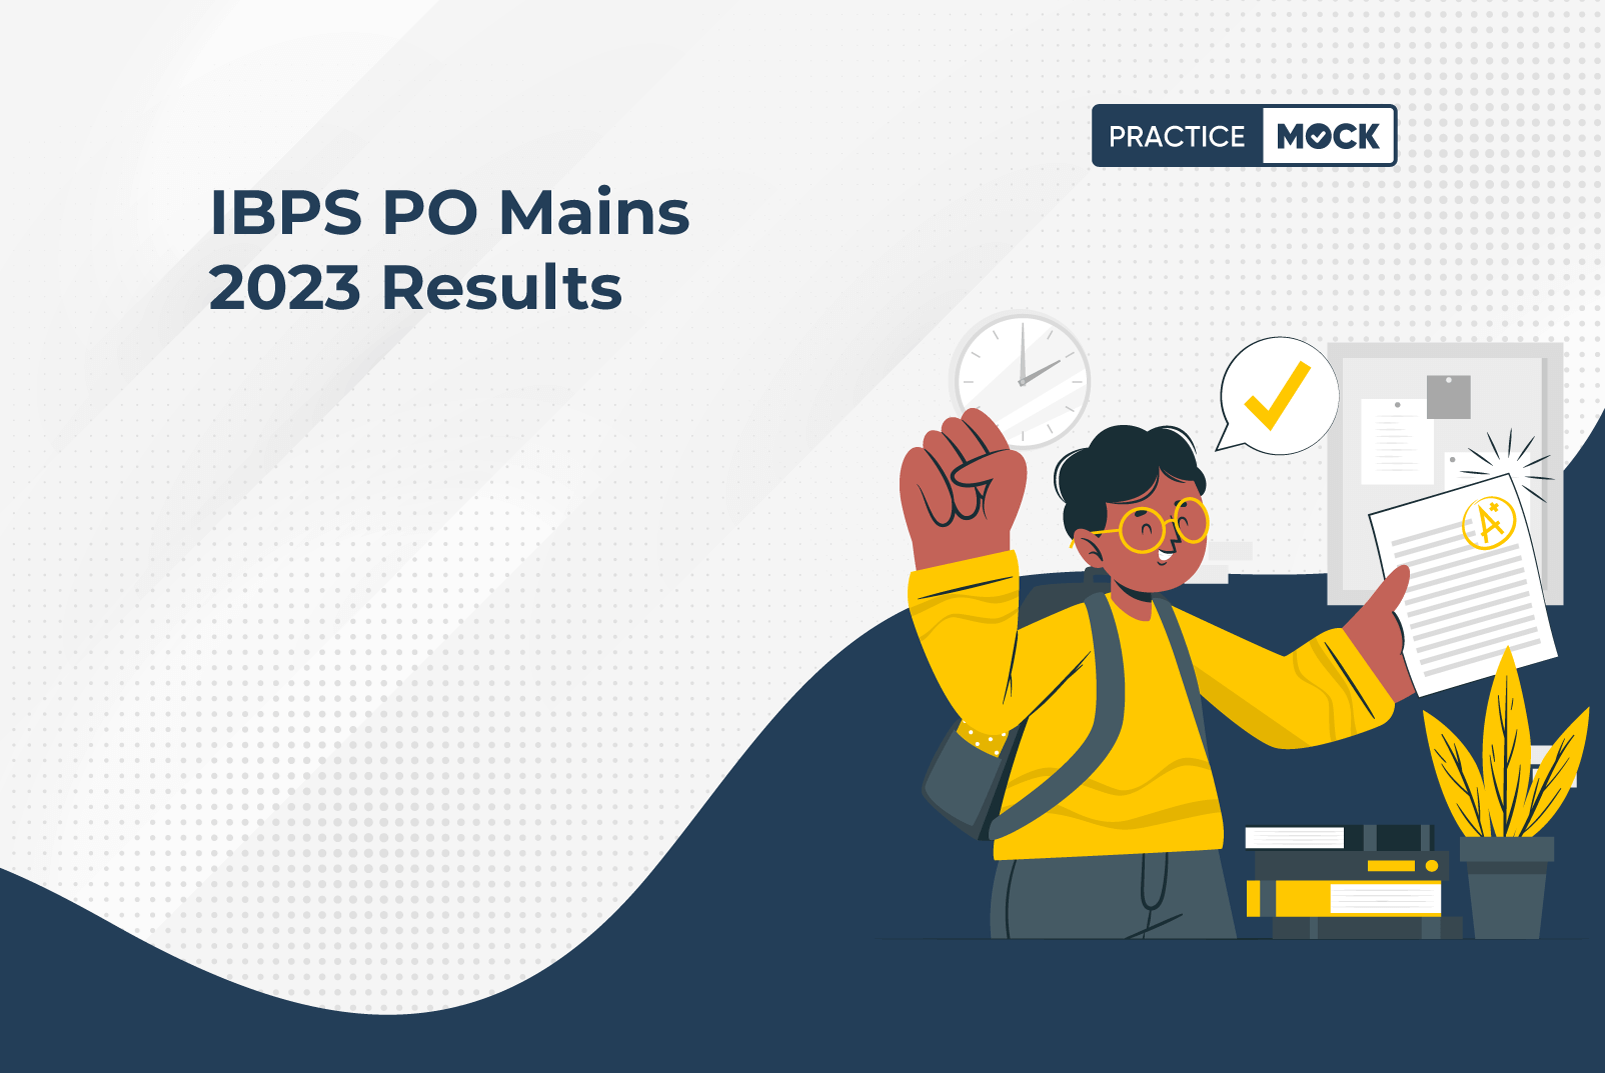 IBPS PO Mains 2023 Results